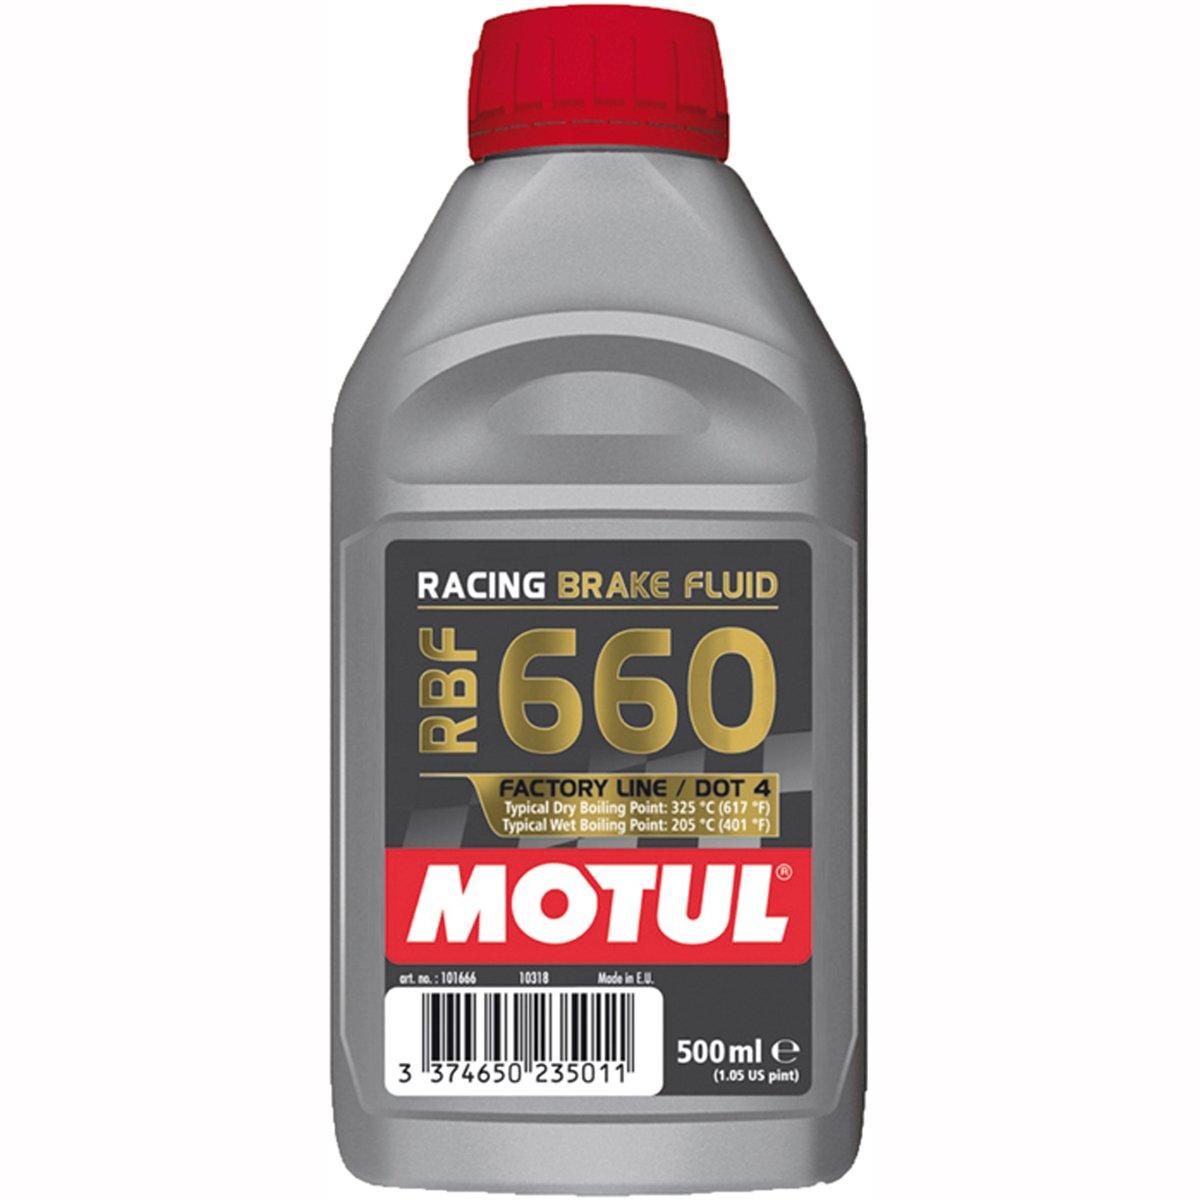 Motul RBF 660 Factory Line Brake Fluid - 500ml - Browse our range of Care: Oils & Liquids - getgearedshop 